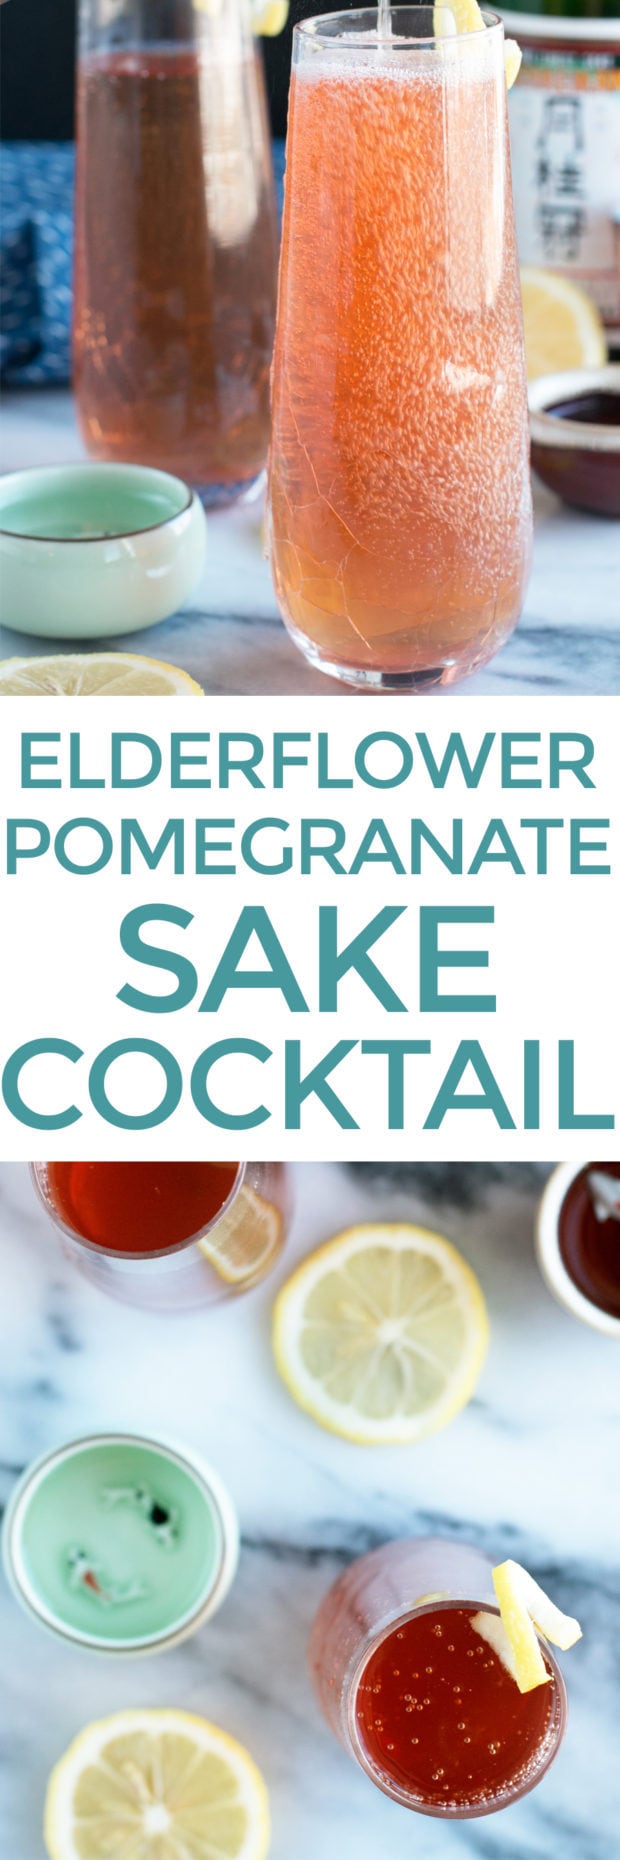 Sparkling Elderflower Sake Cocktail